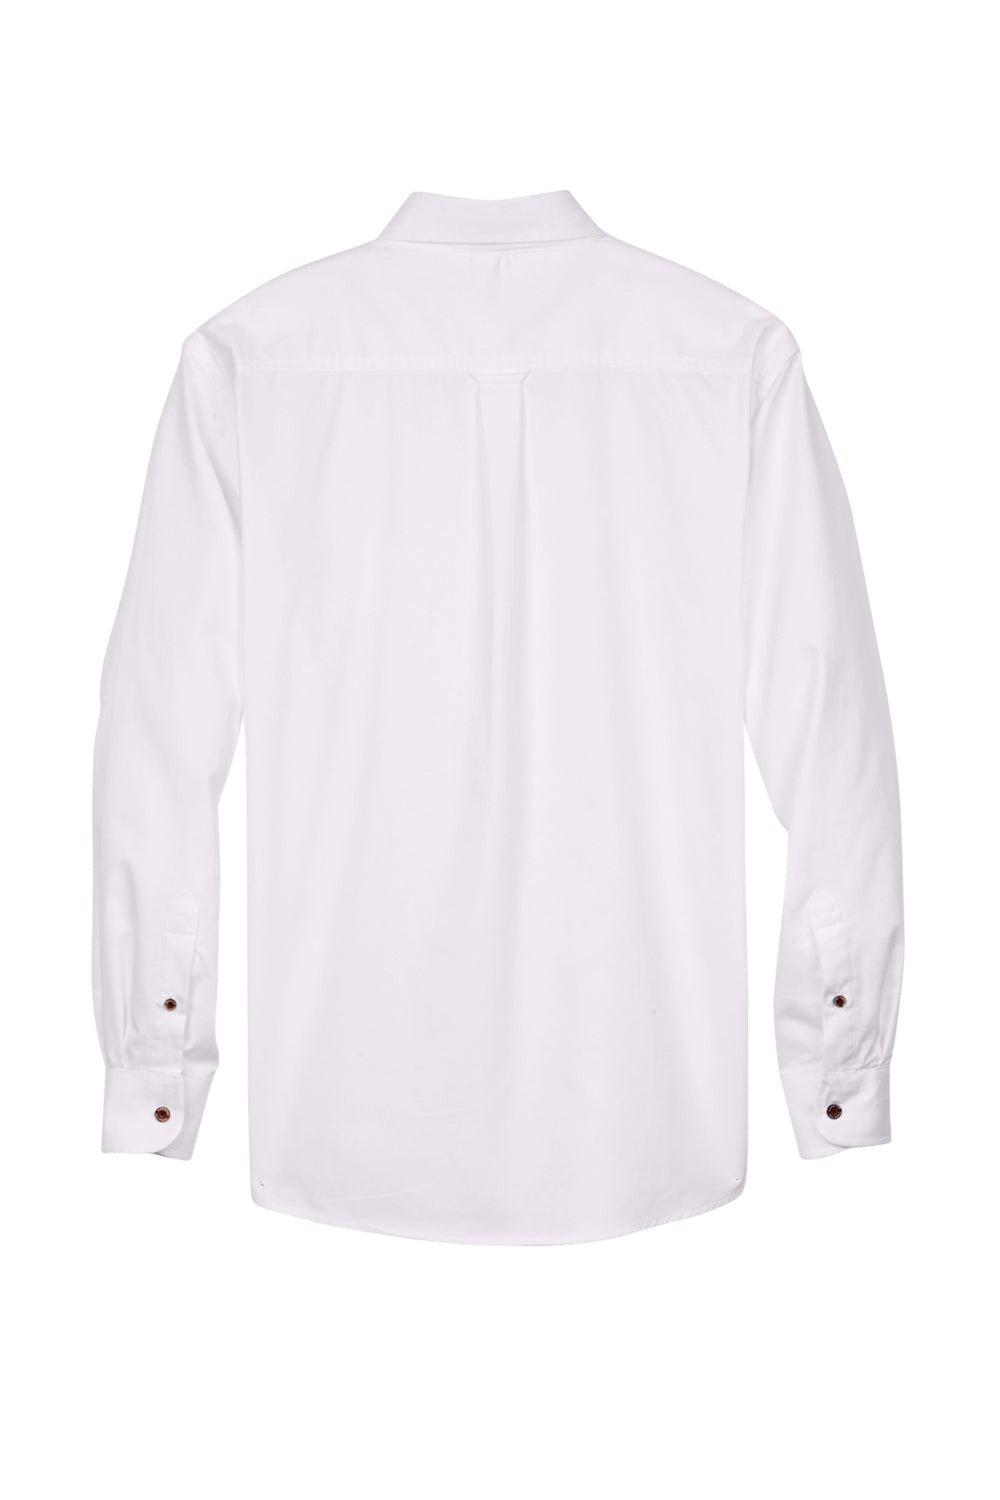 Harriton M500/M500T Wrinkle Resistant Long Sleeve Button Down Shirt w/ Pocket White Flat Back